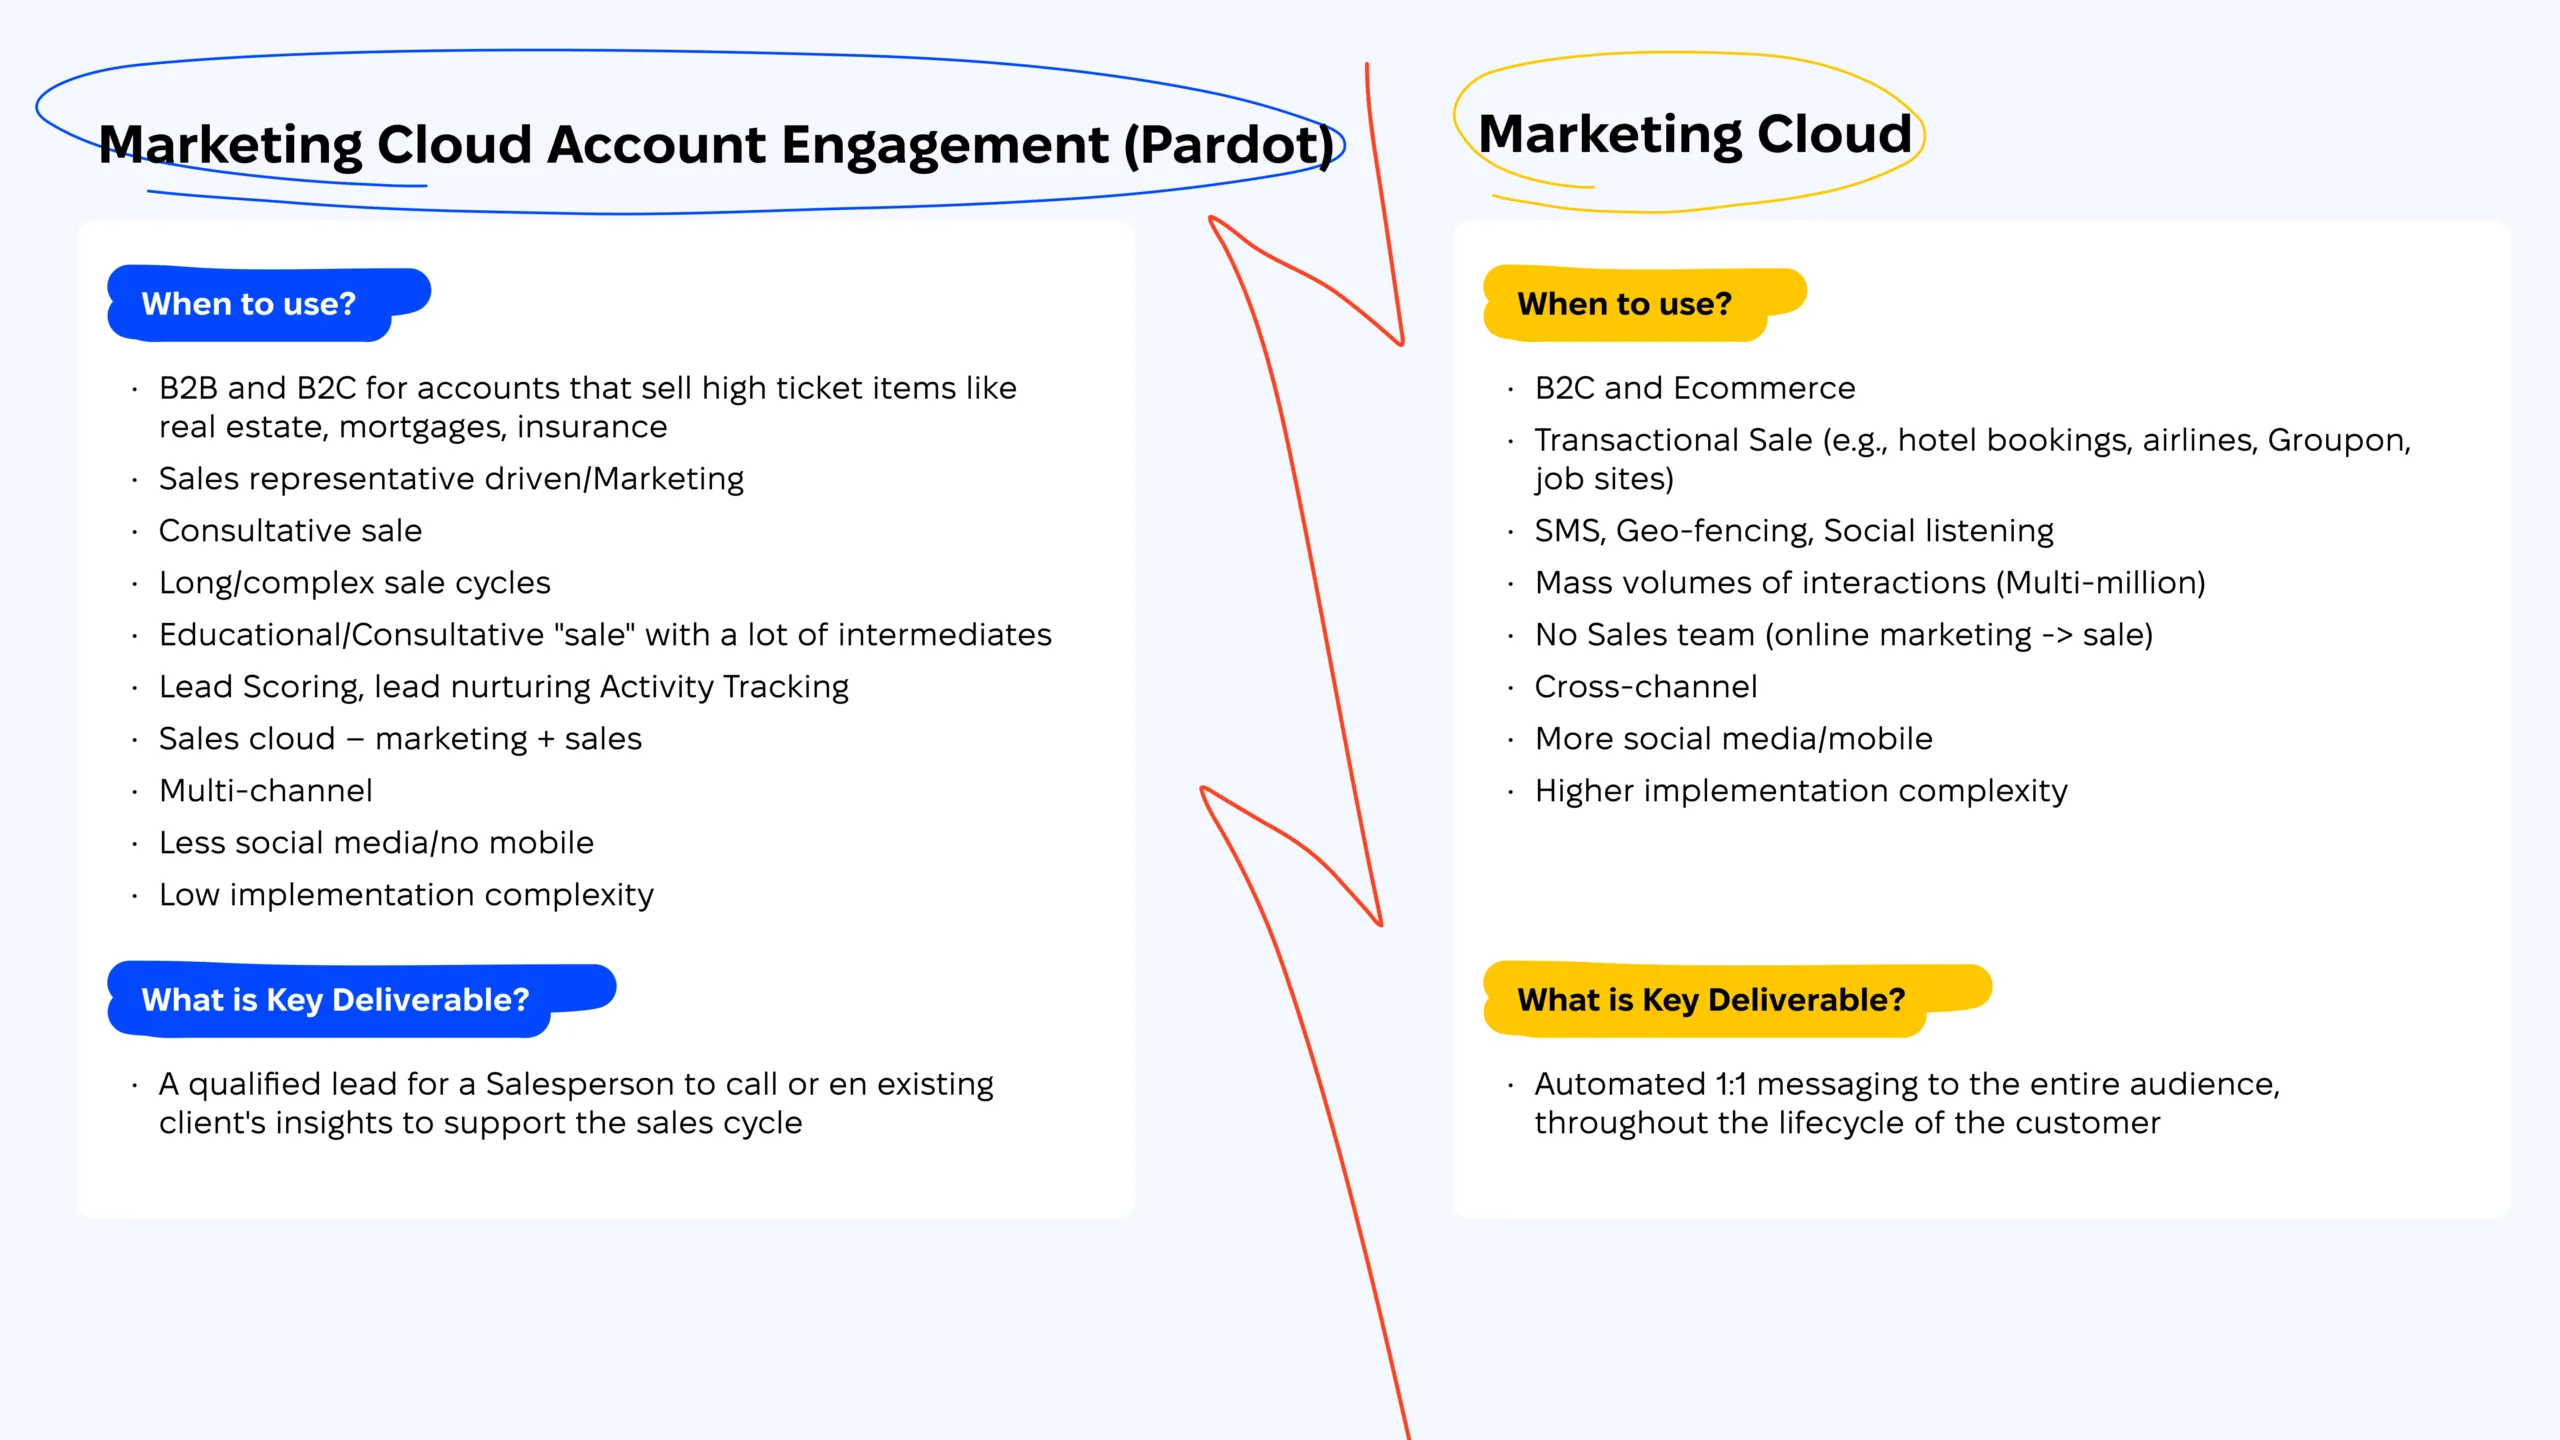 Marketing Cloud Account Engagement (Pardot) vs Marketing Cloud